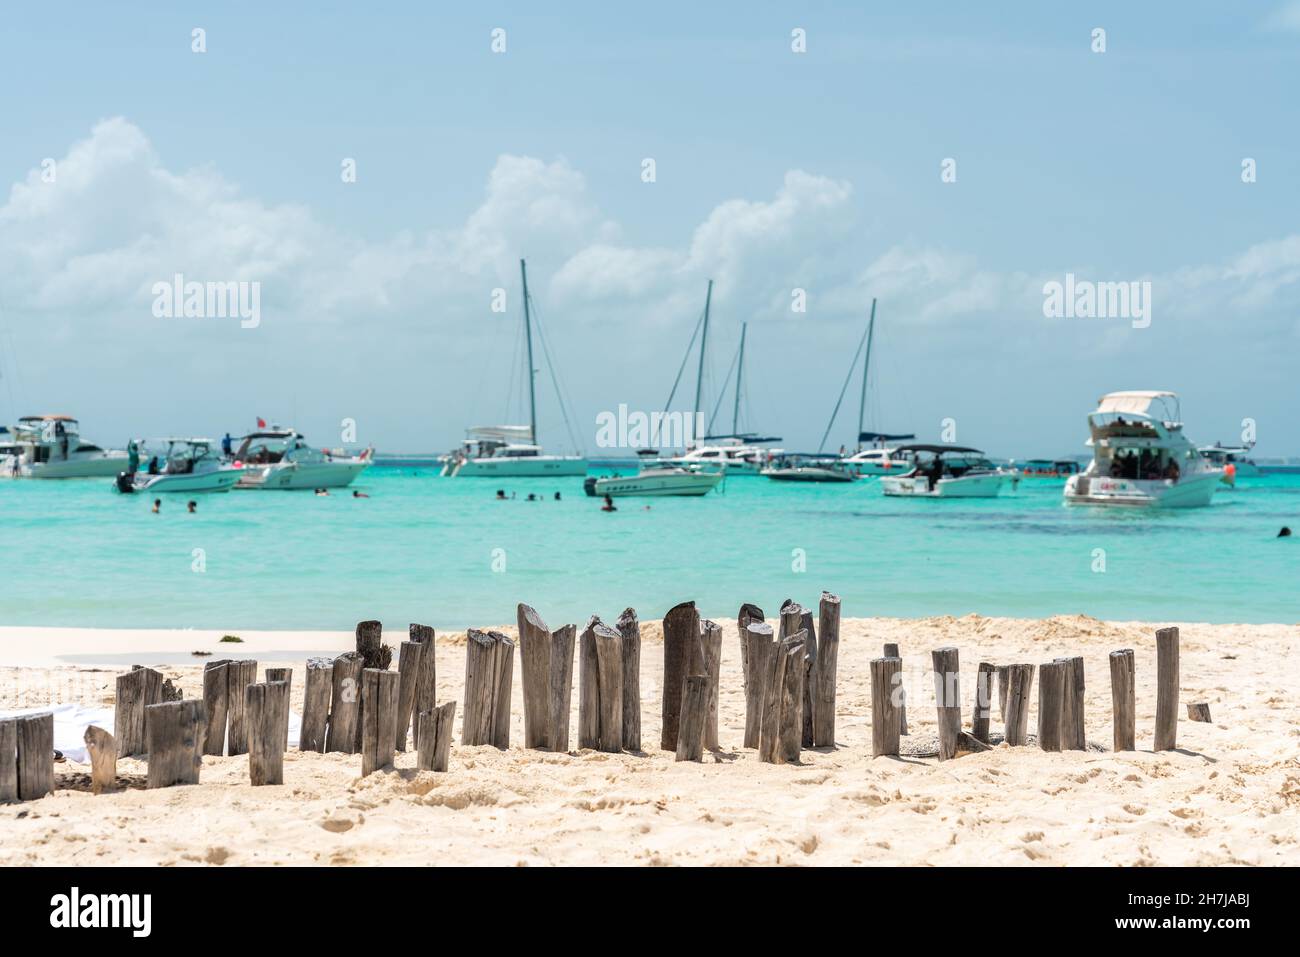 Isla Mujeres, Cancun, Mexico - September 13, 2021: Beautiful Caribbean beach Playa Norte or North beach on the Isla Mujeres near Cancun, Mexico Stock Photo